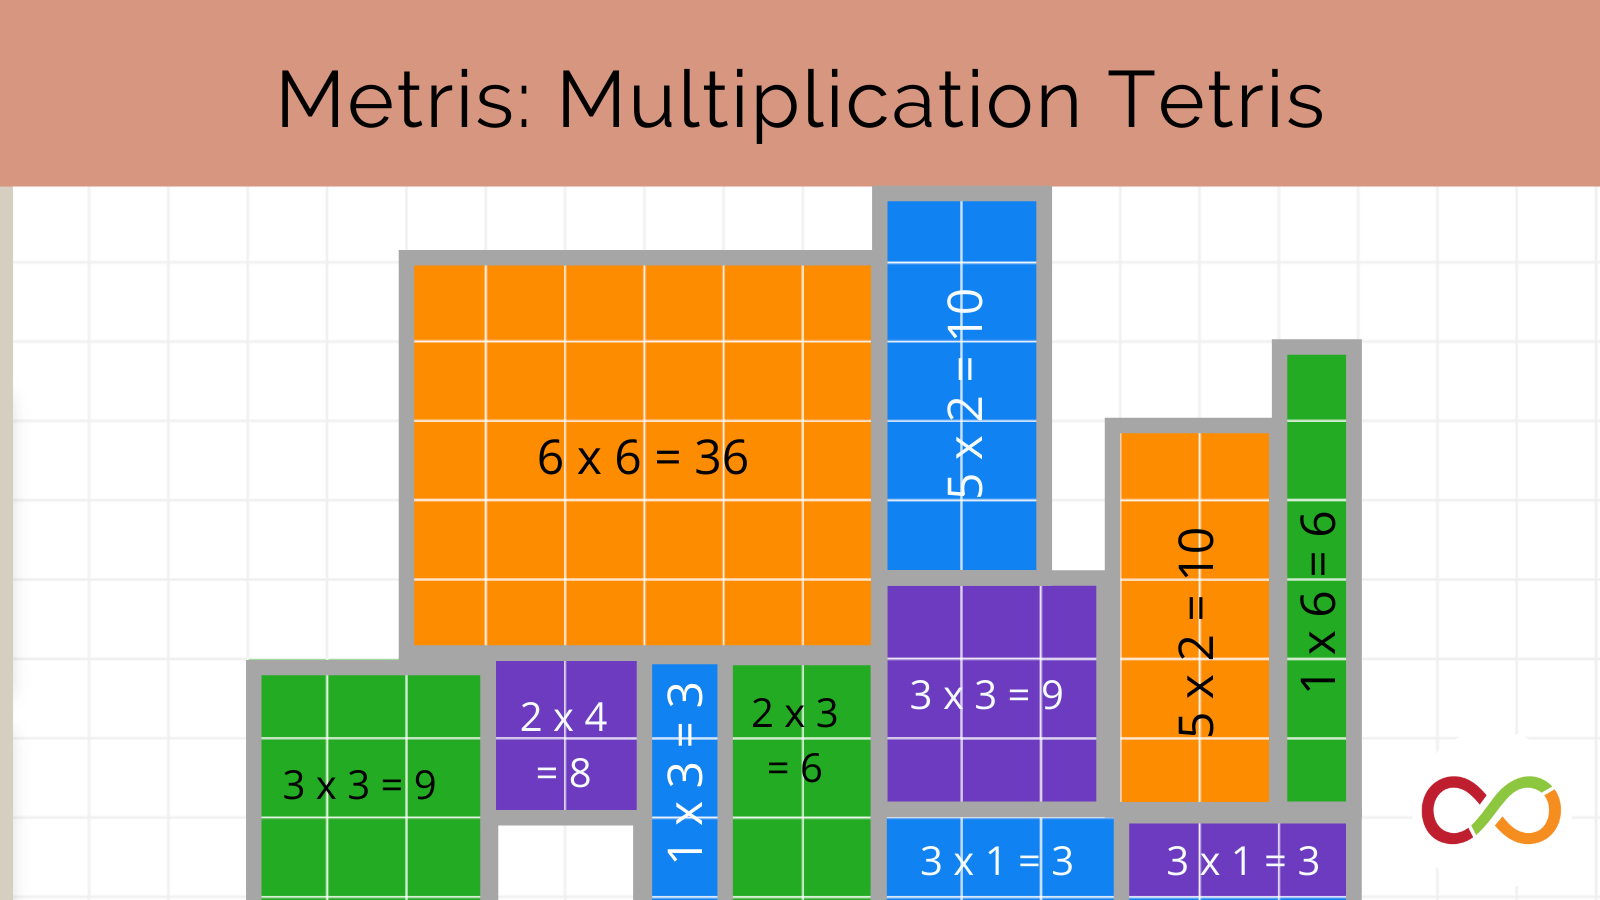 An image linking to the Metris: Multiplication Tetris lesson